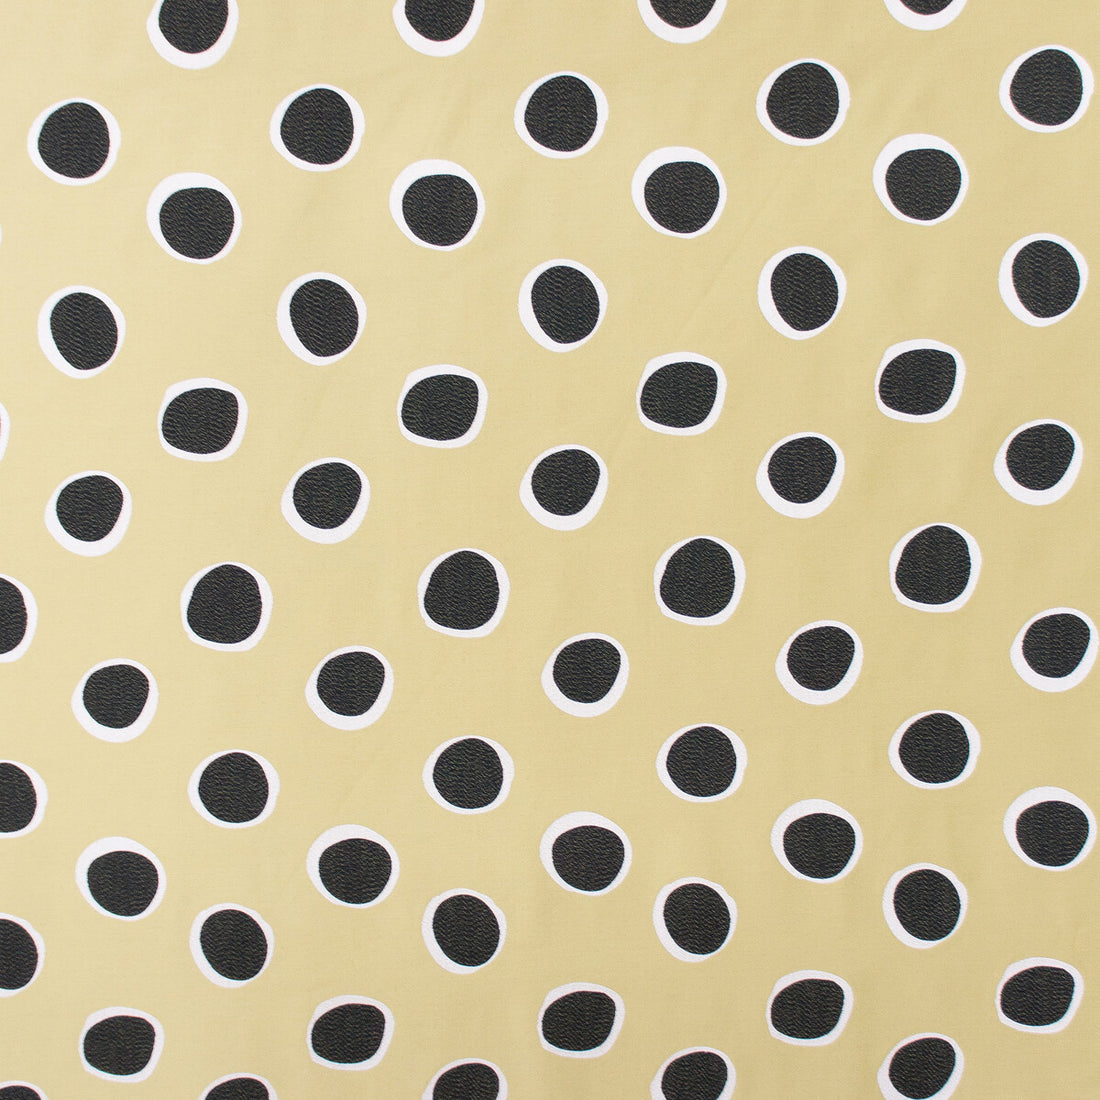 Solis fabric in fondo oro color - pattern GDT5587.005.0 - by Gaston y Daniela in the Gaston Nuevo Mundo collection